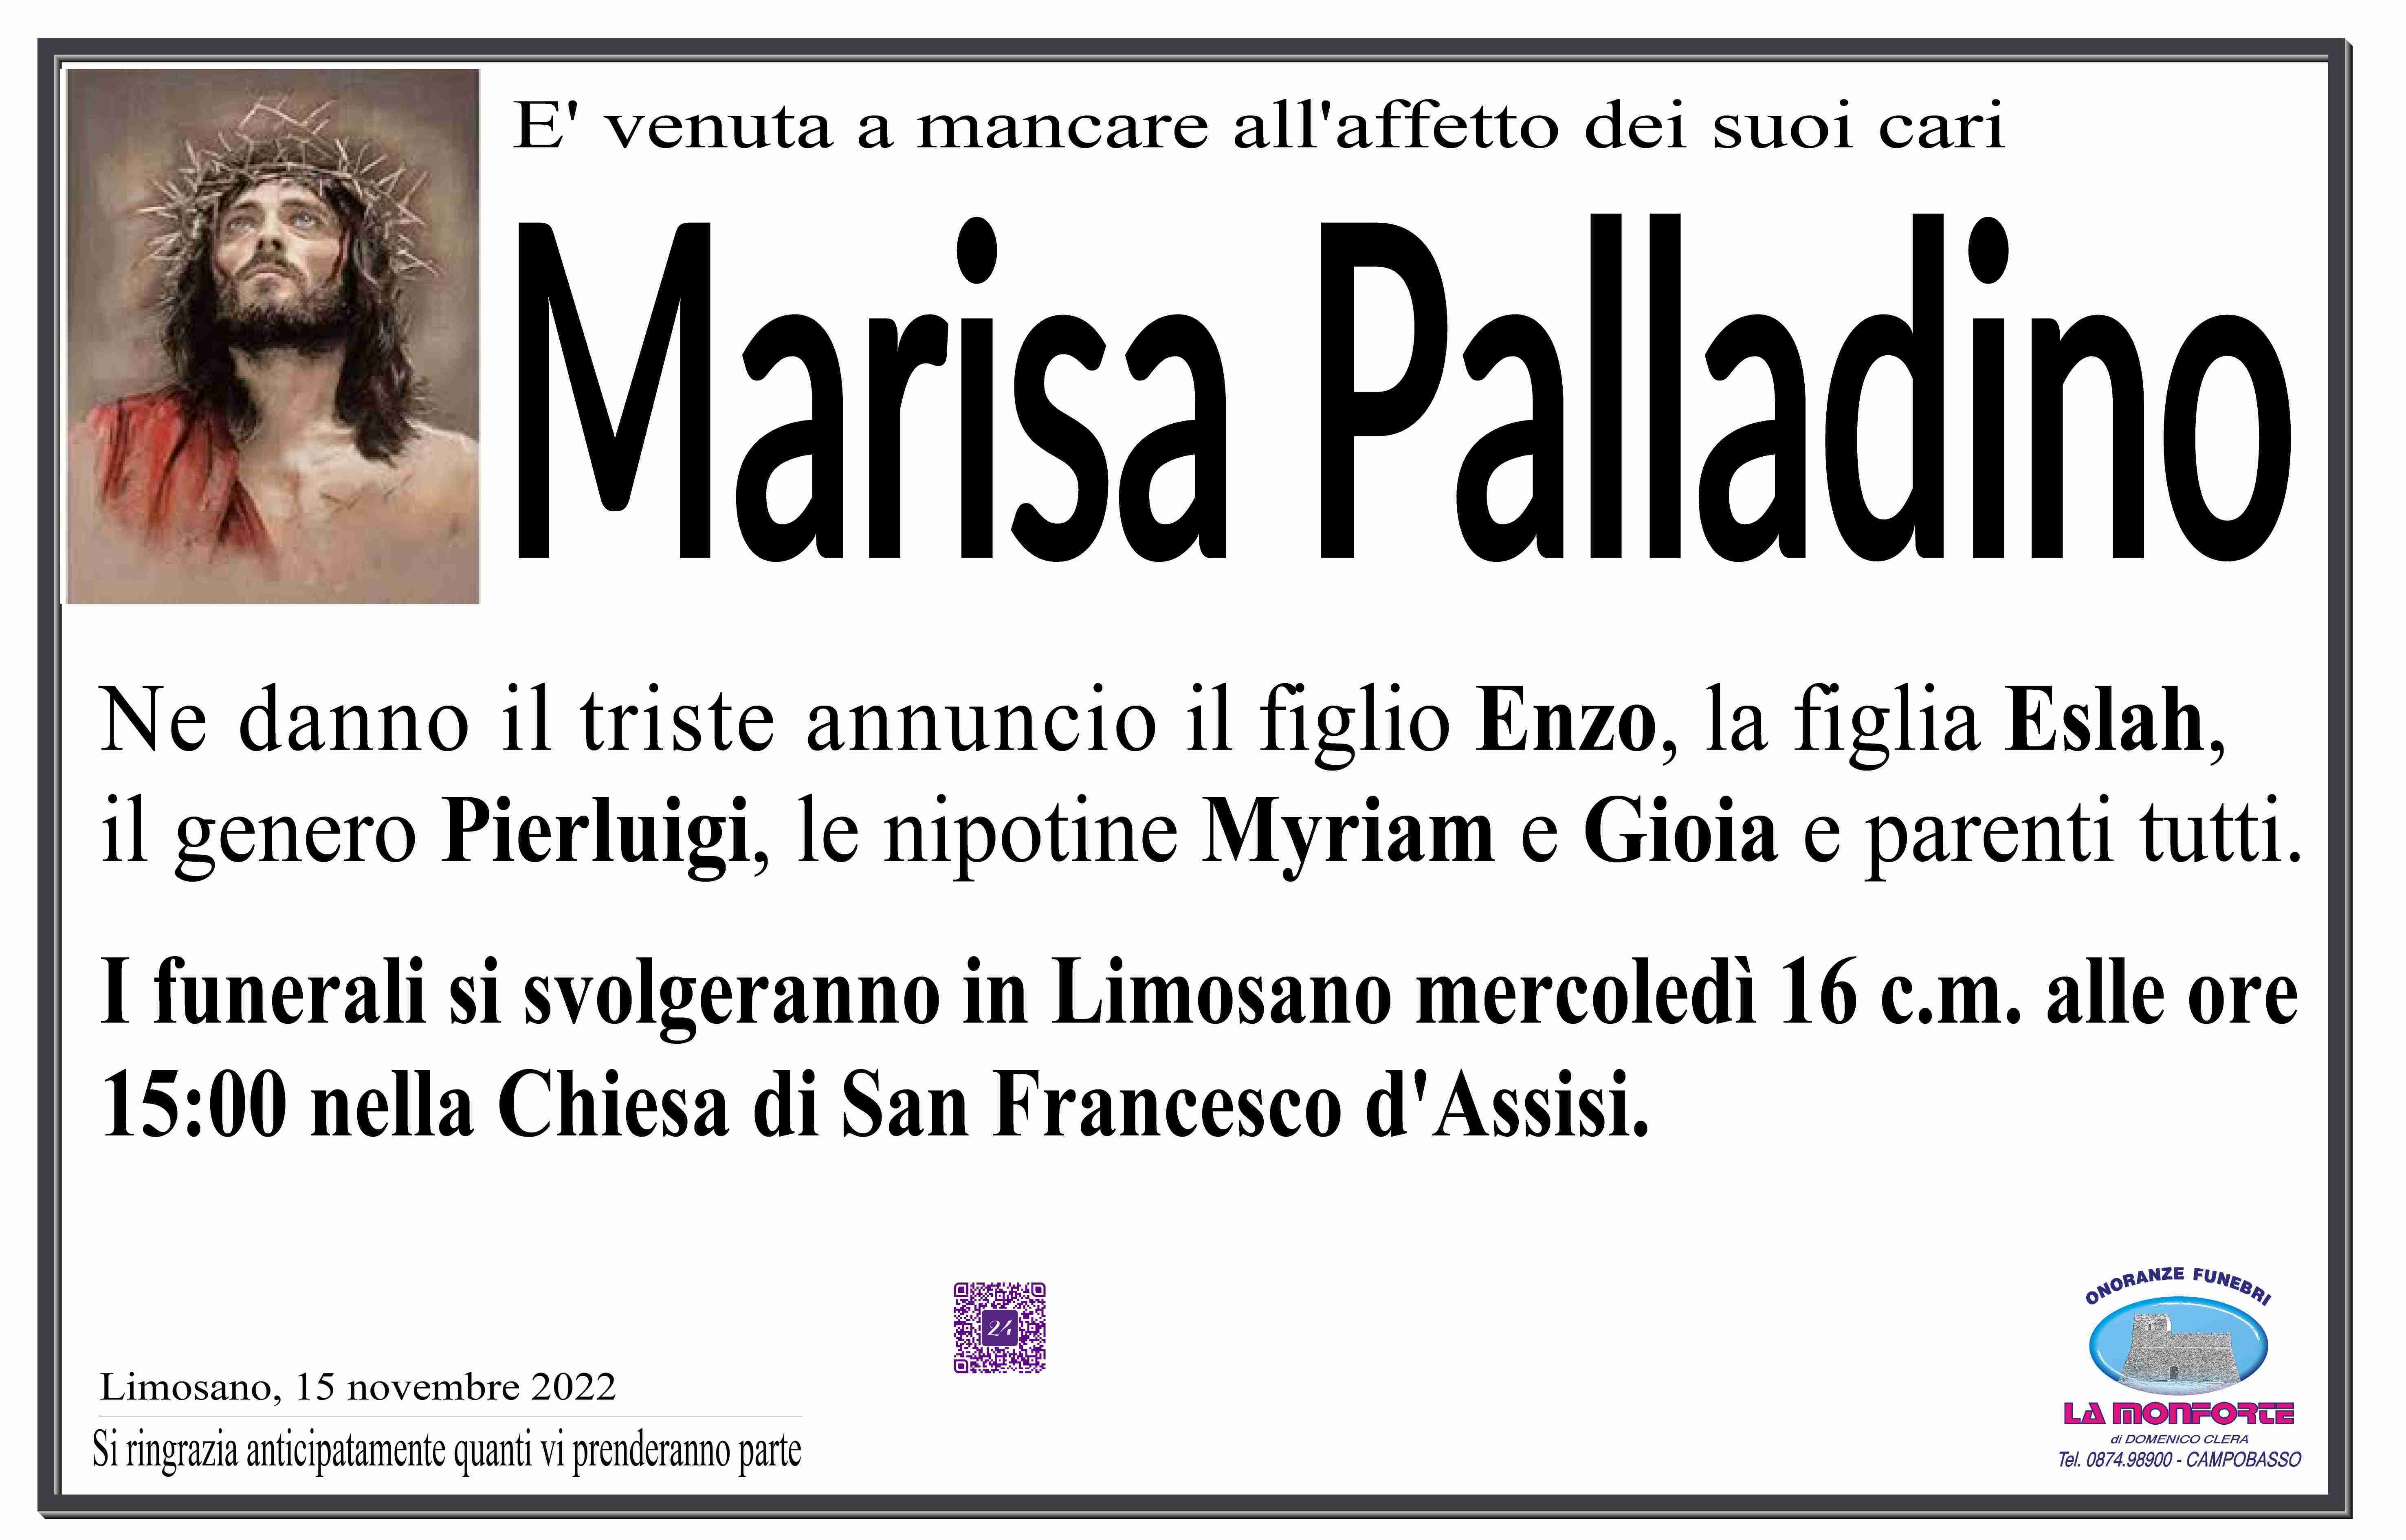 Marisa Palladino